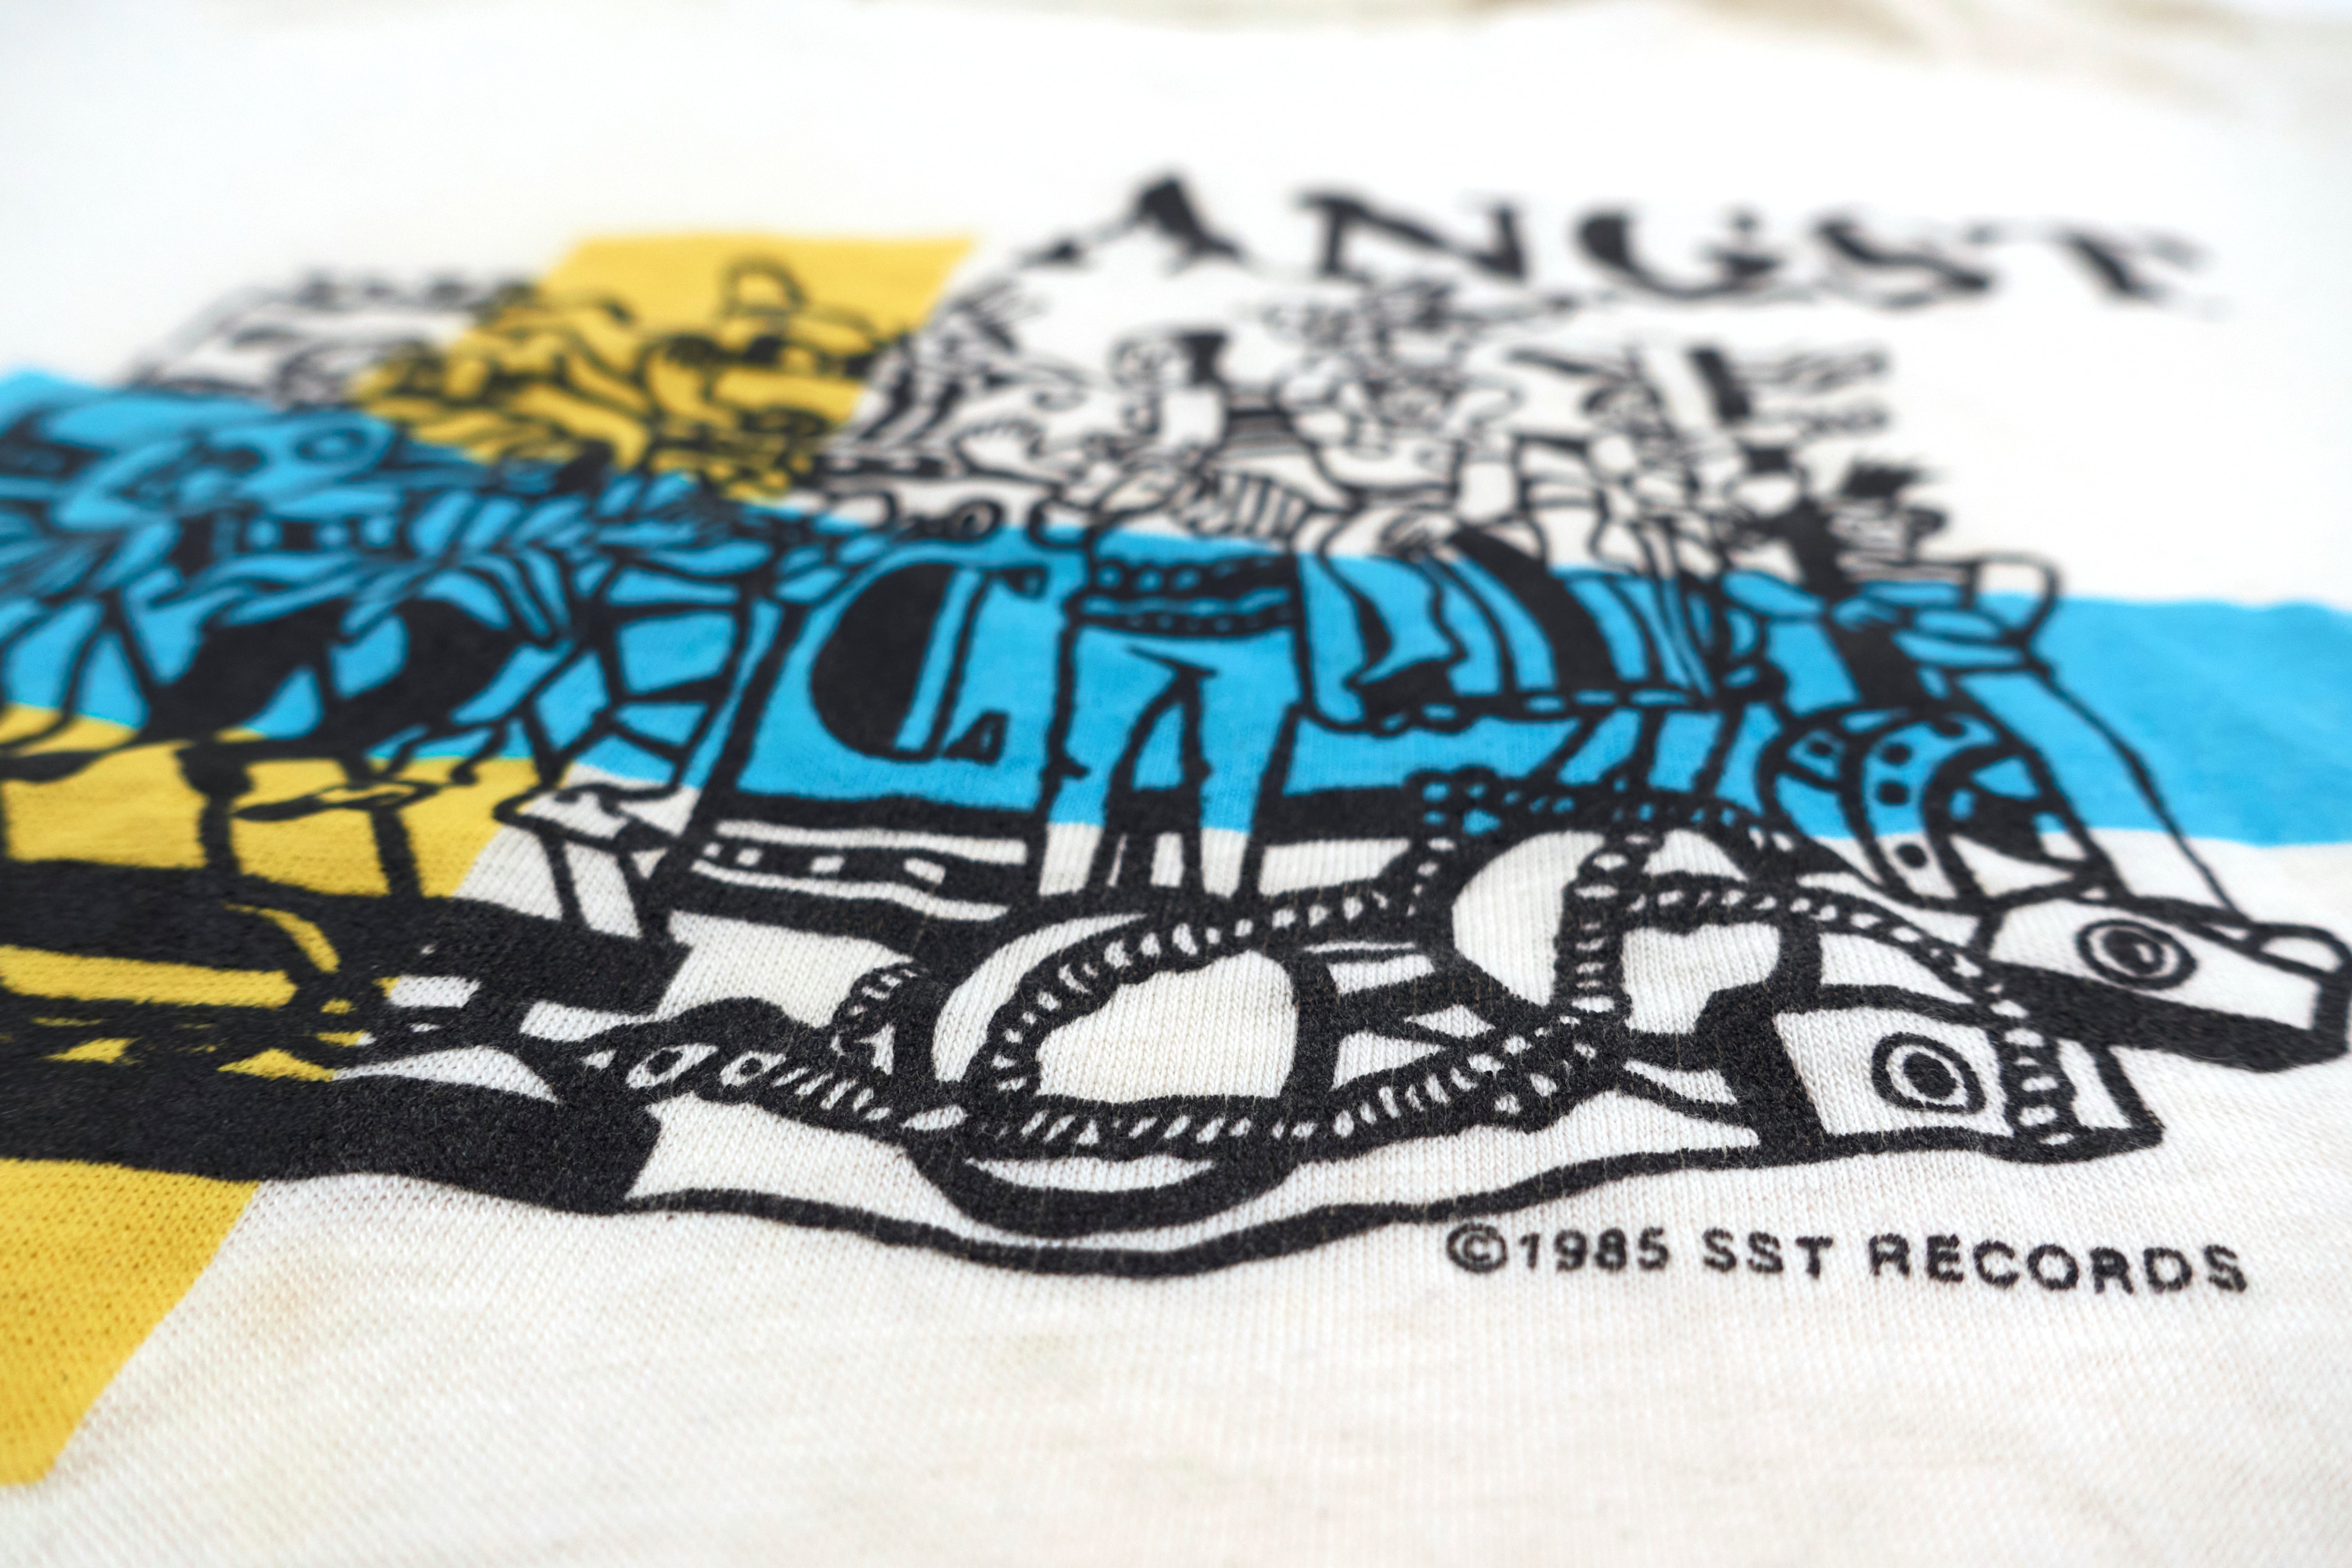 Angst – Lite Life 1985 Tour Shirt Size Medium